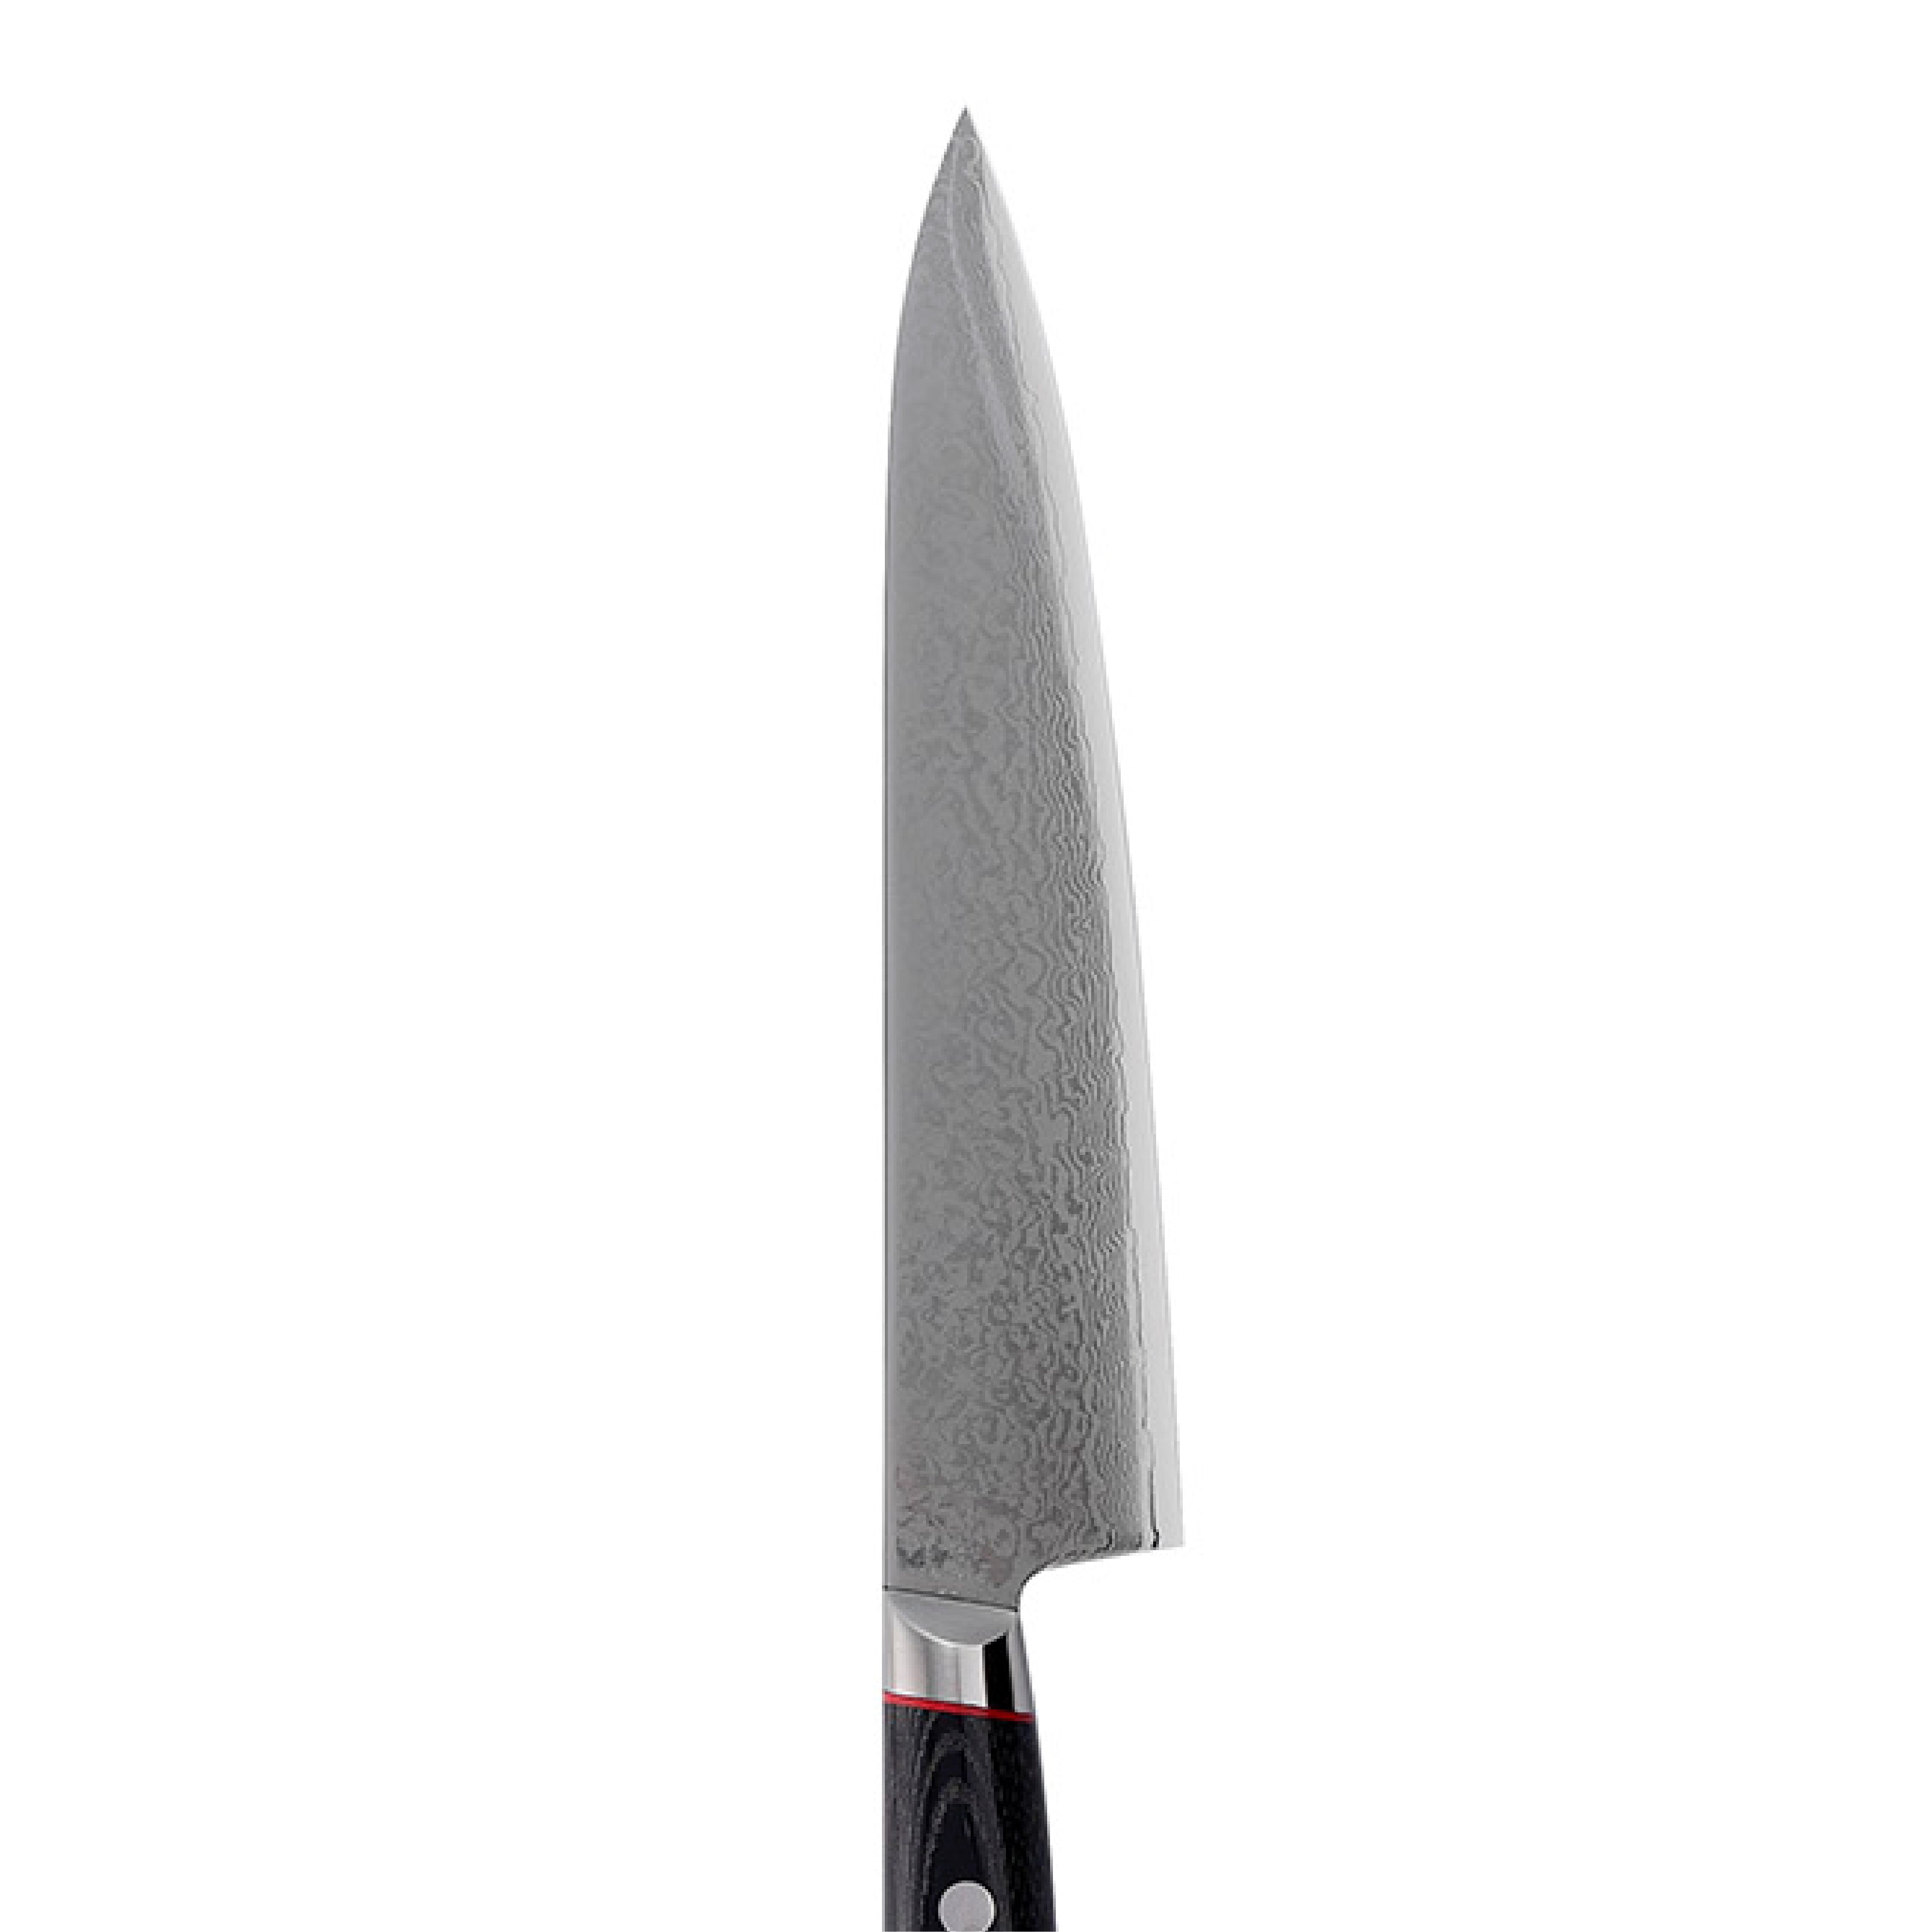 SEKIKANETSUGU Saiun VG10 Utility knife / 120mm - 150mm